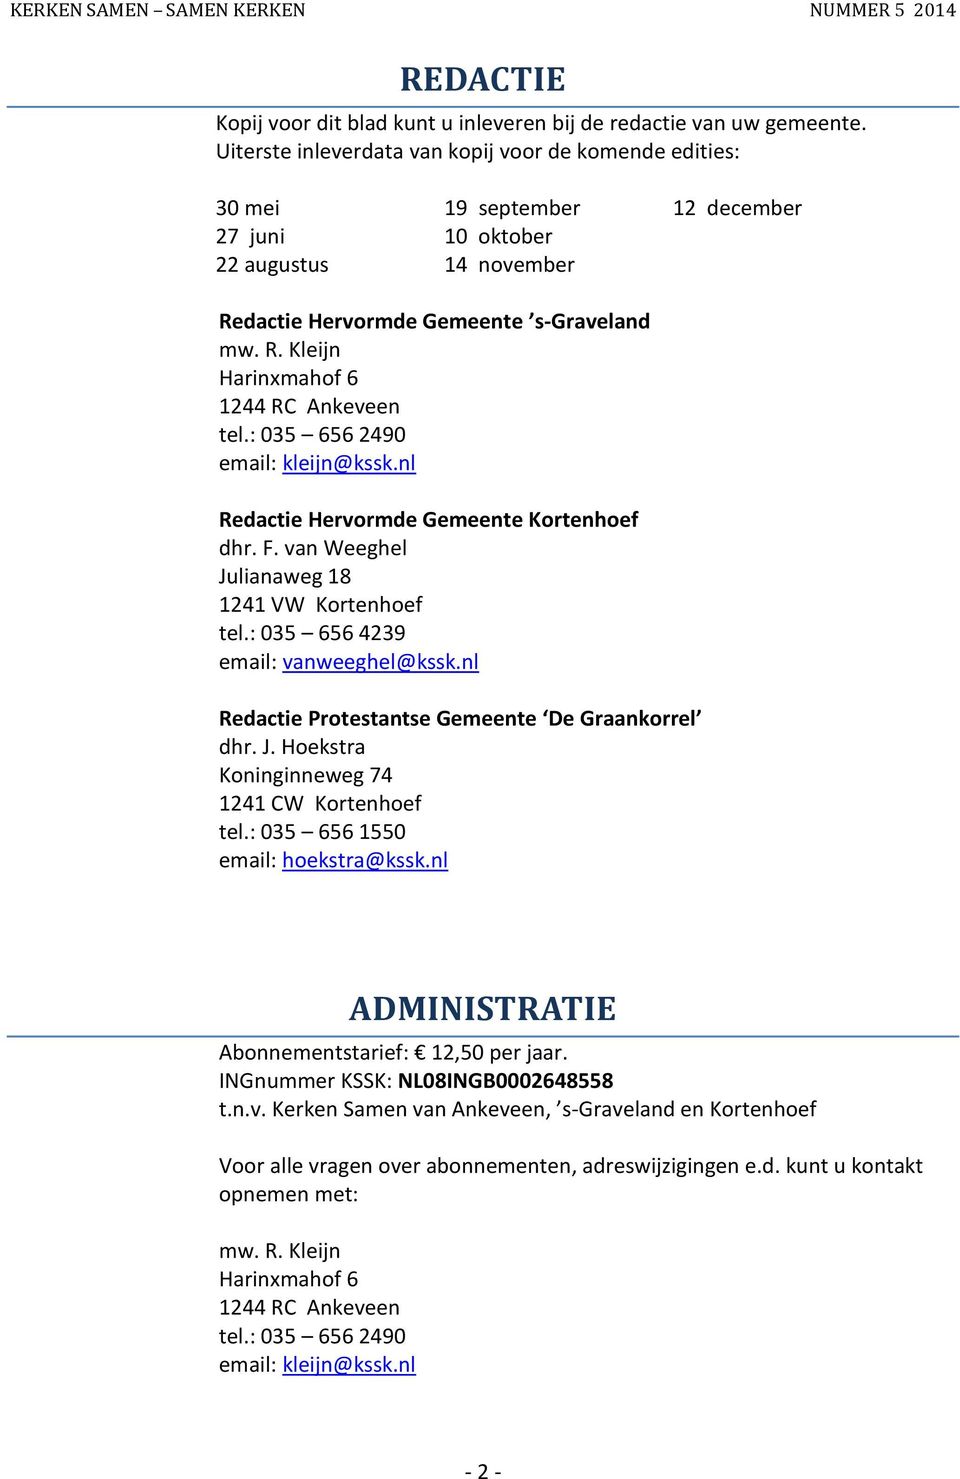 : 035 656 2490 email: kleijn@kssk.nl Redactie Hervormde Gemeente Kortenhoef dhr. F. van Weeghel Julianaweg 18 1241 VW Kortenhoef tel.: 035 656 4239 email: vanweeghel@kssk.